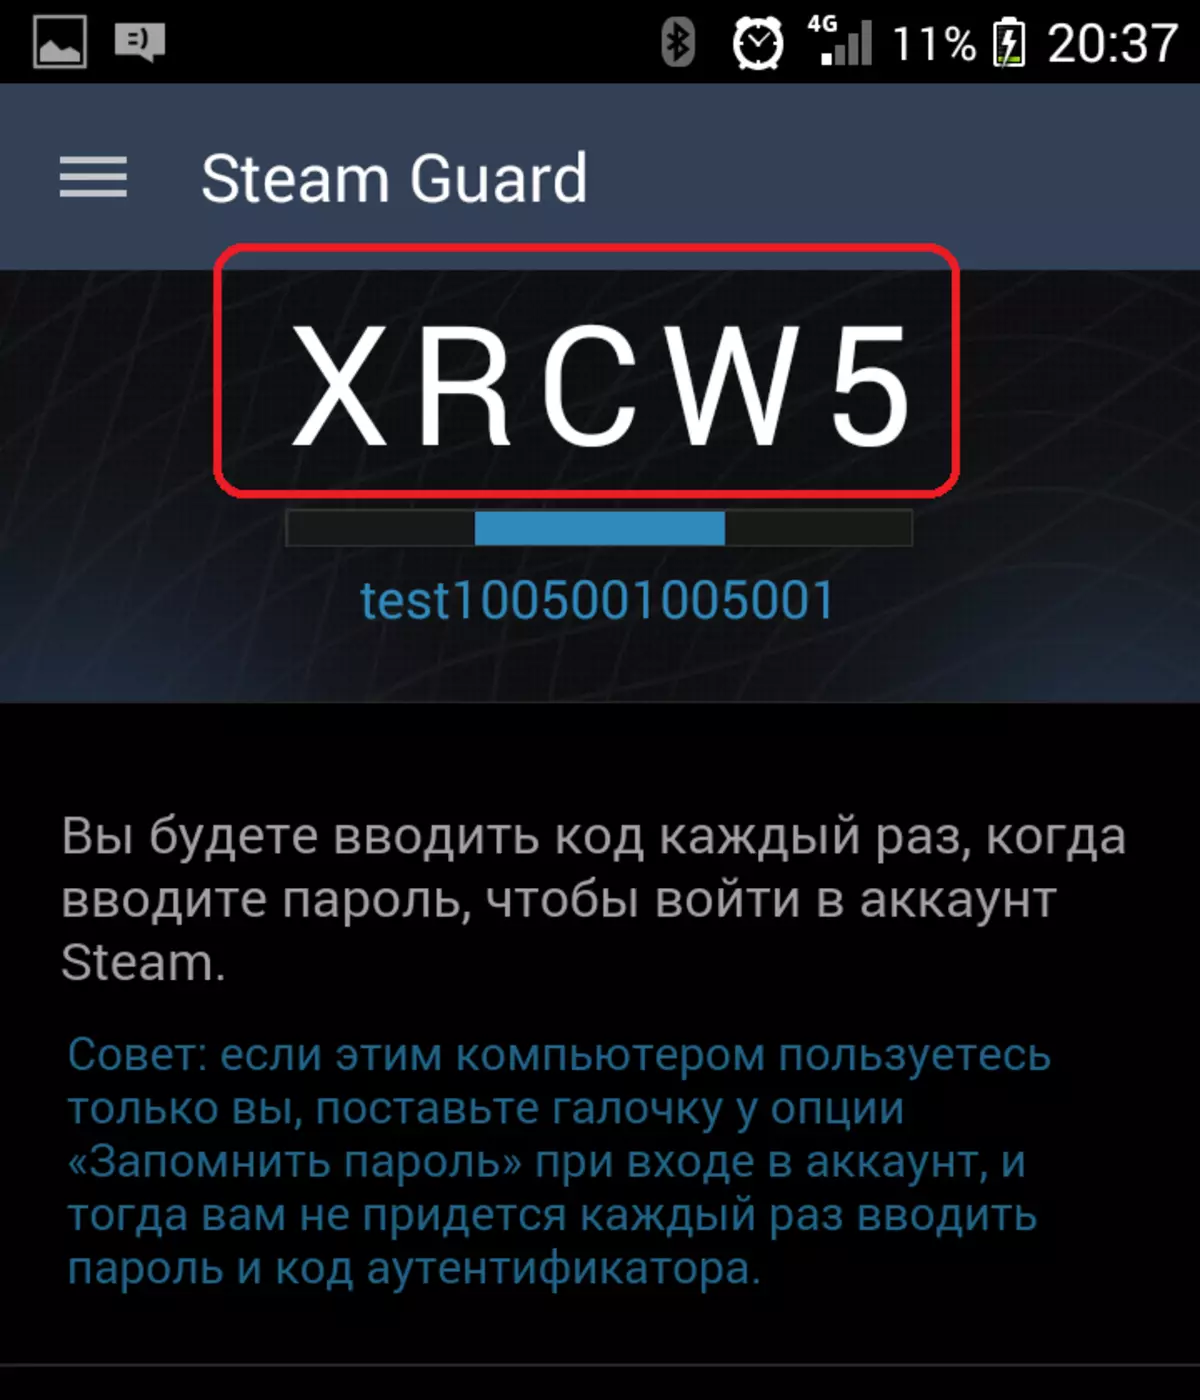 Steam Guard Code.